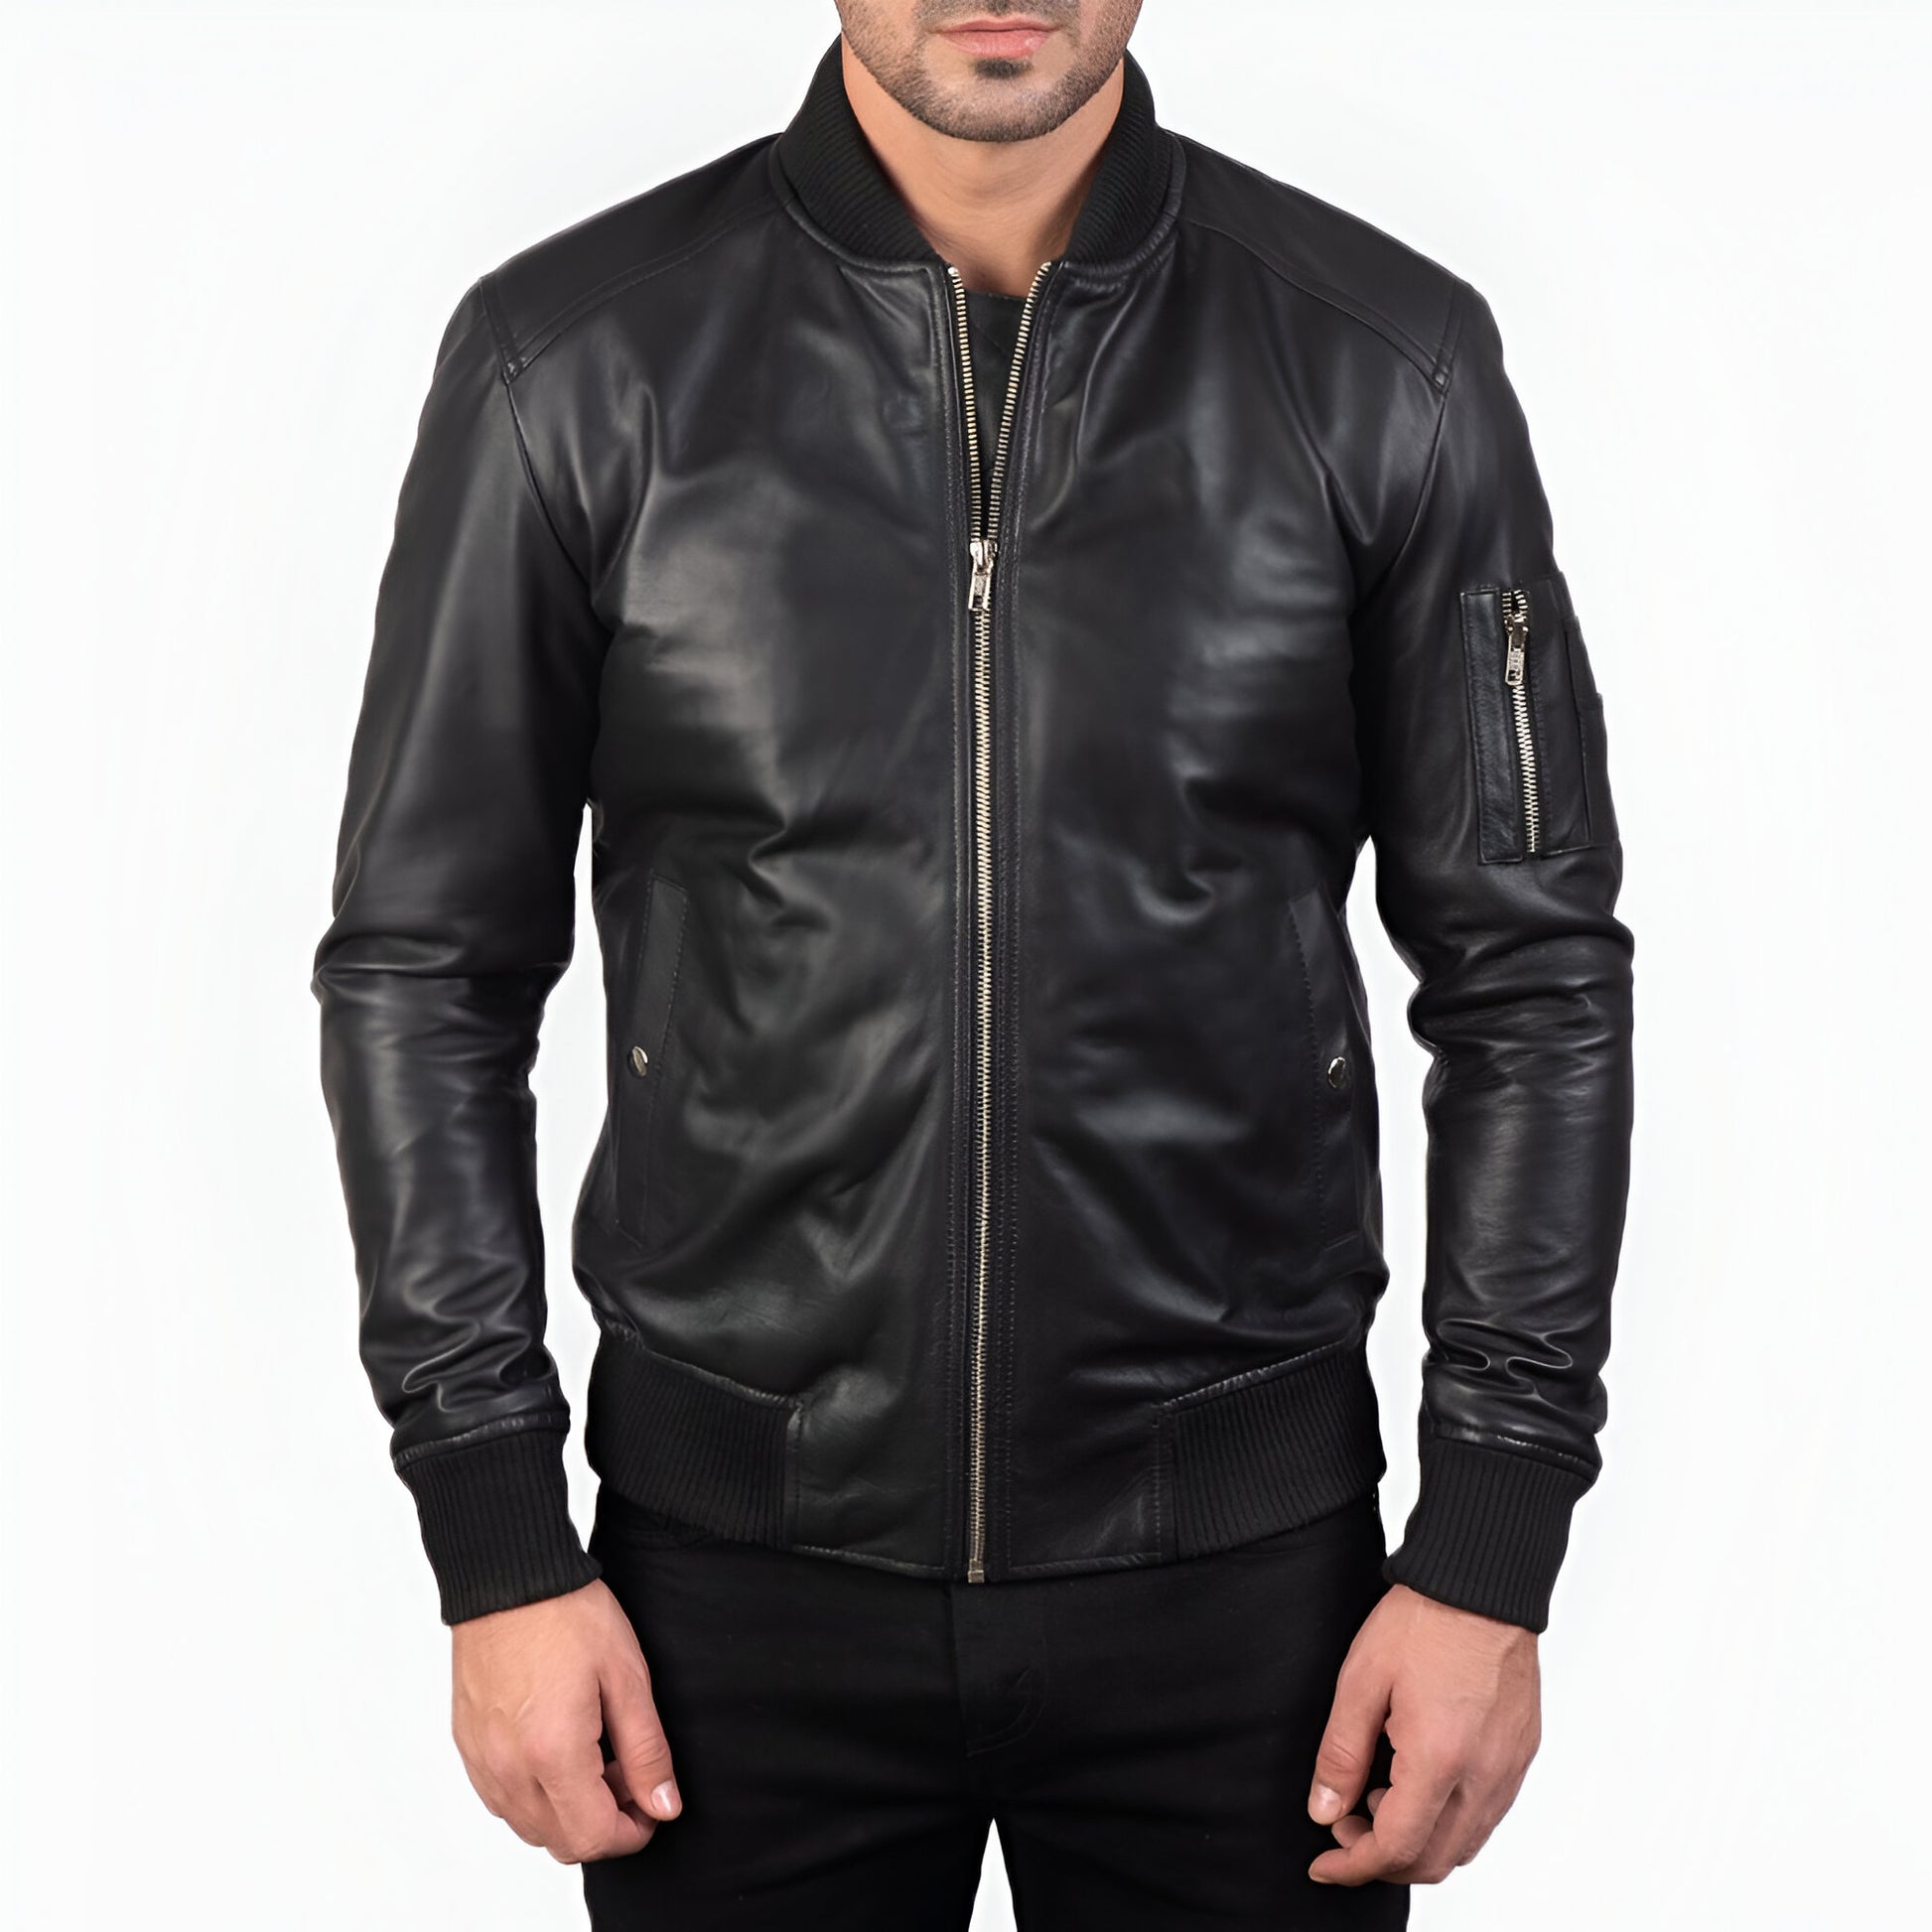 Dicks Leather Classic Black Leather Bomber Jacket